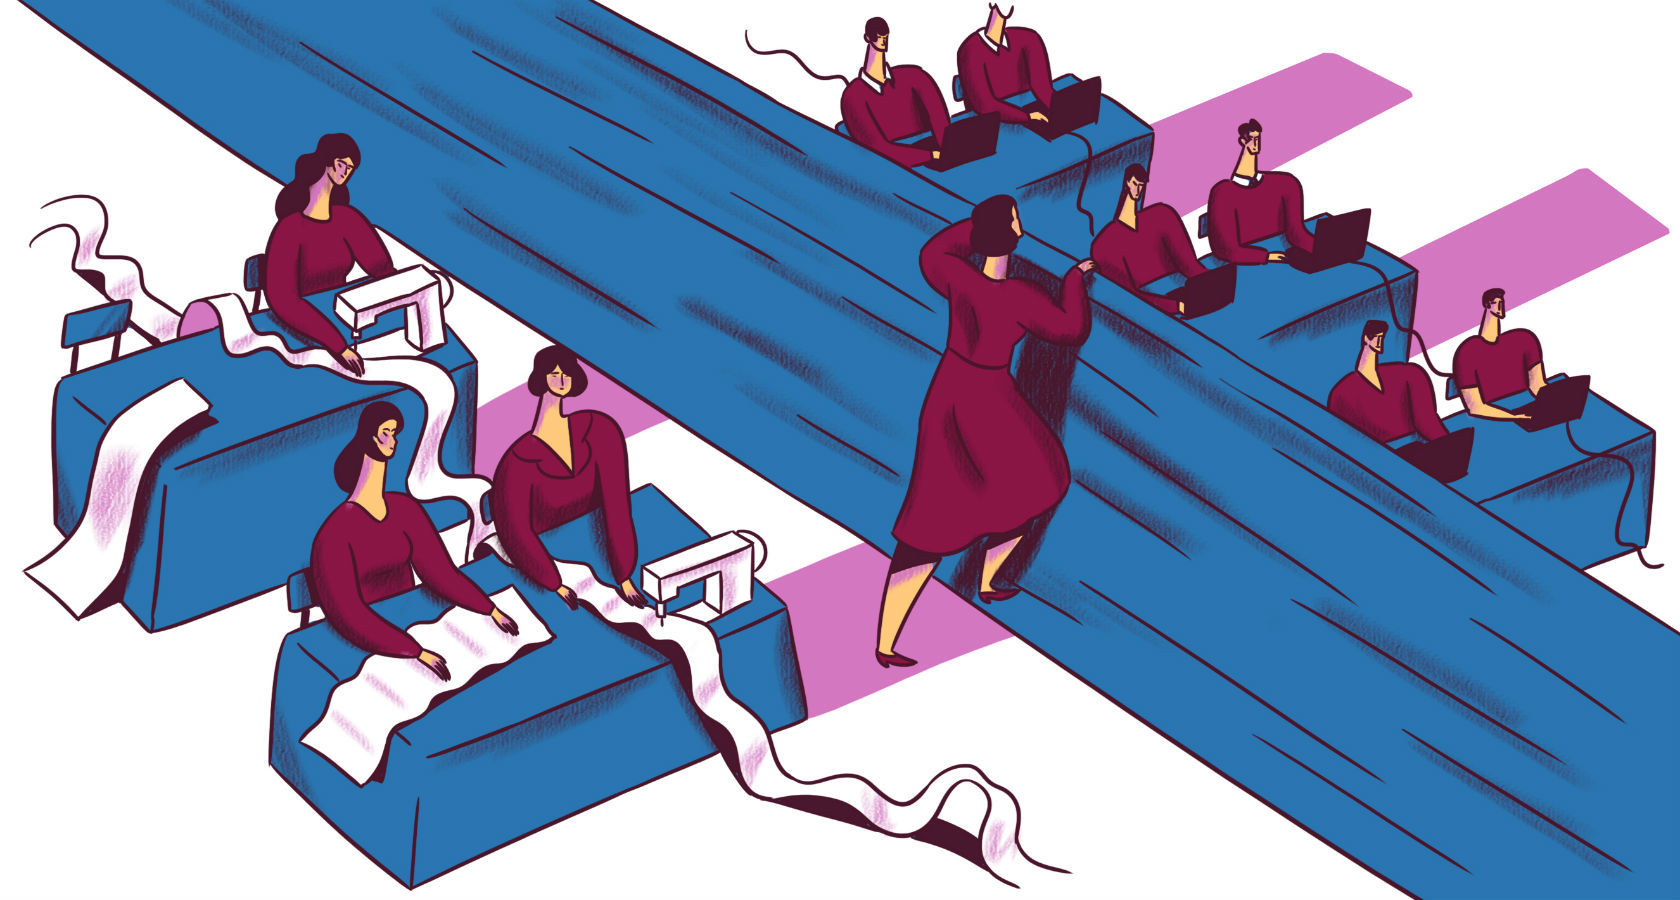 A depiction of a barrier between men and women in types of jobs. Illustration: Tatyana Zelenskaya